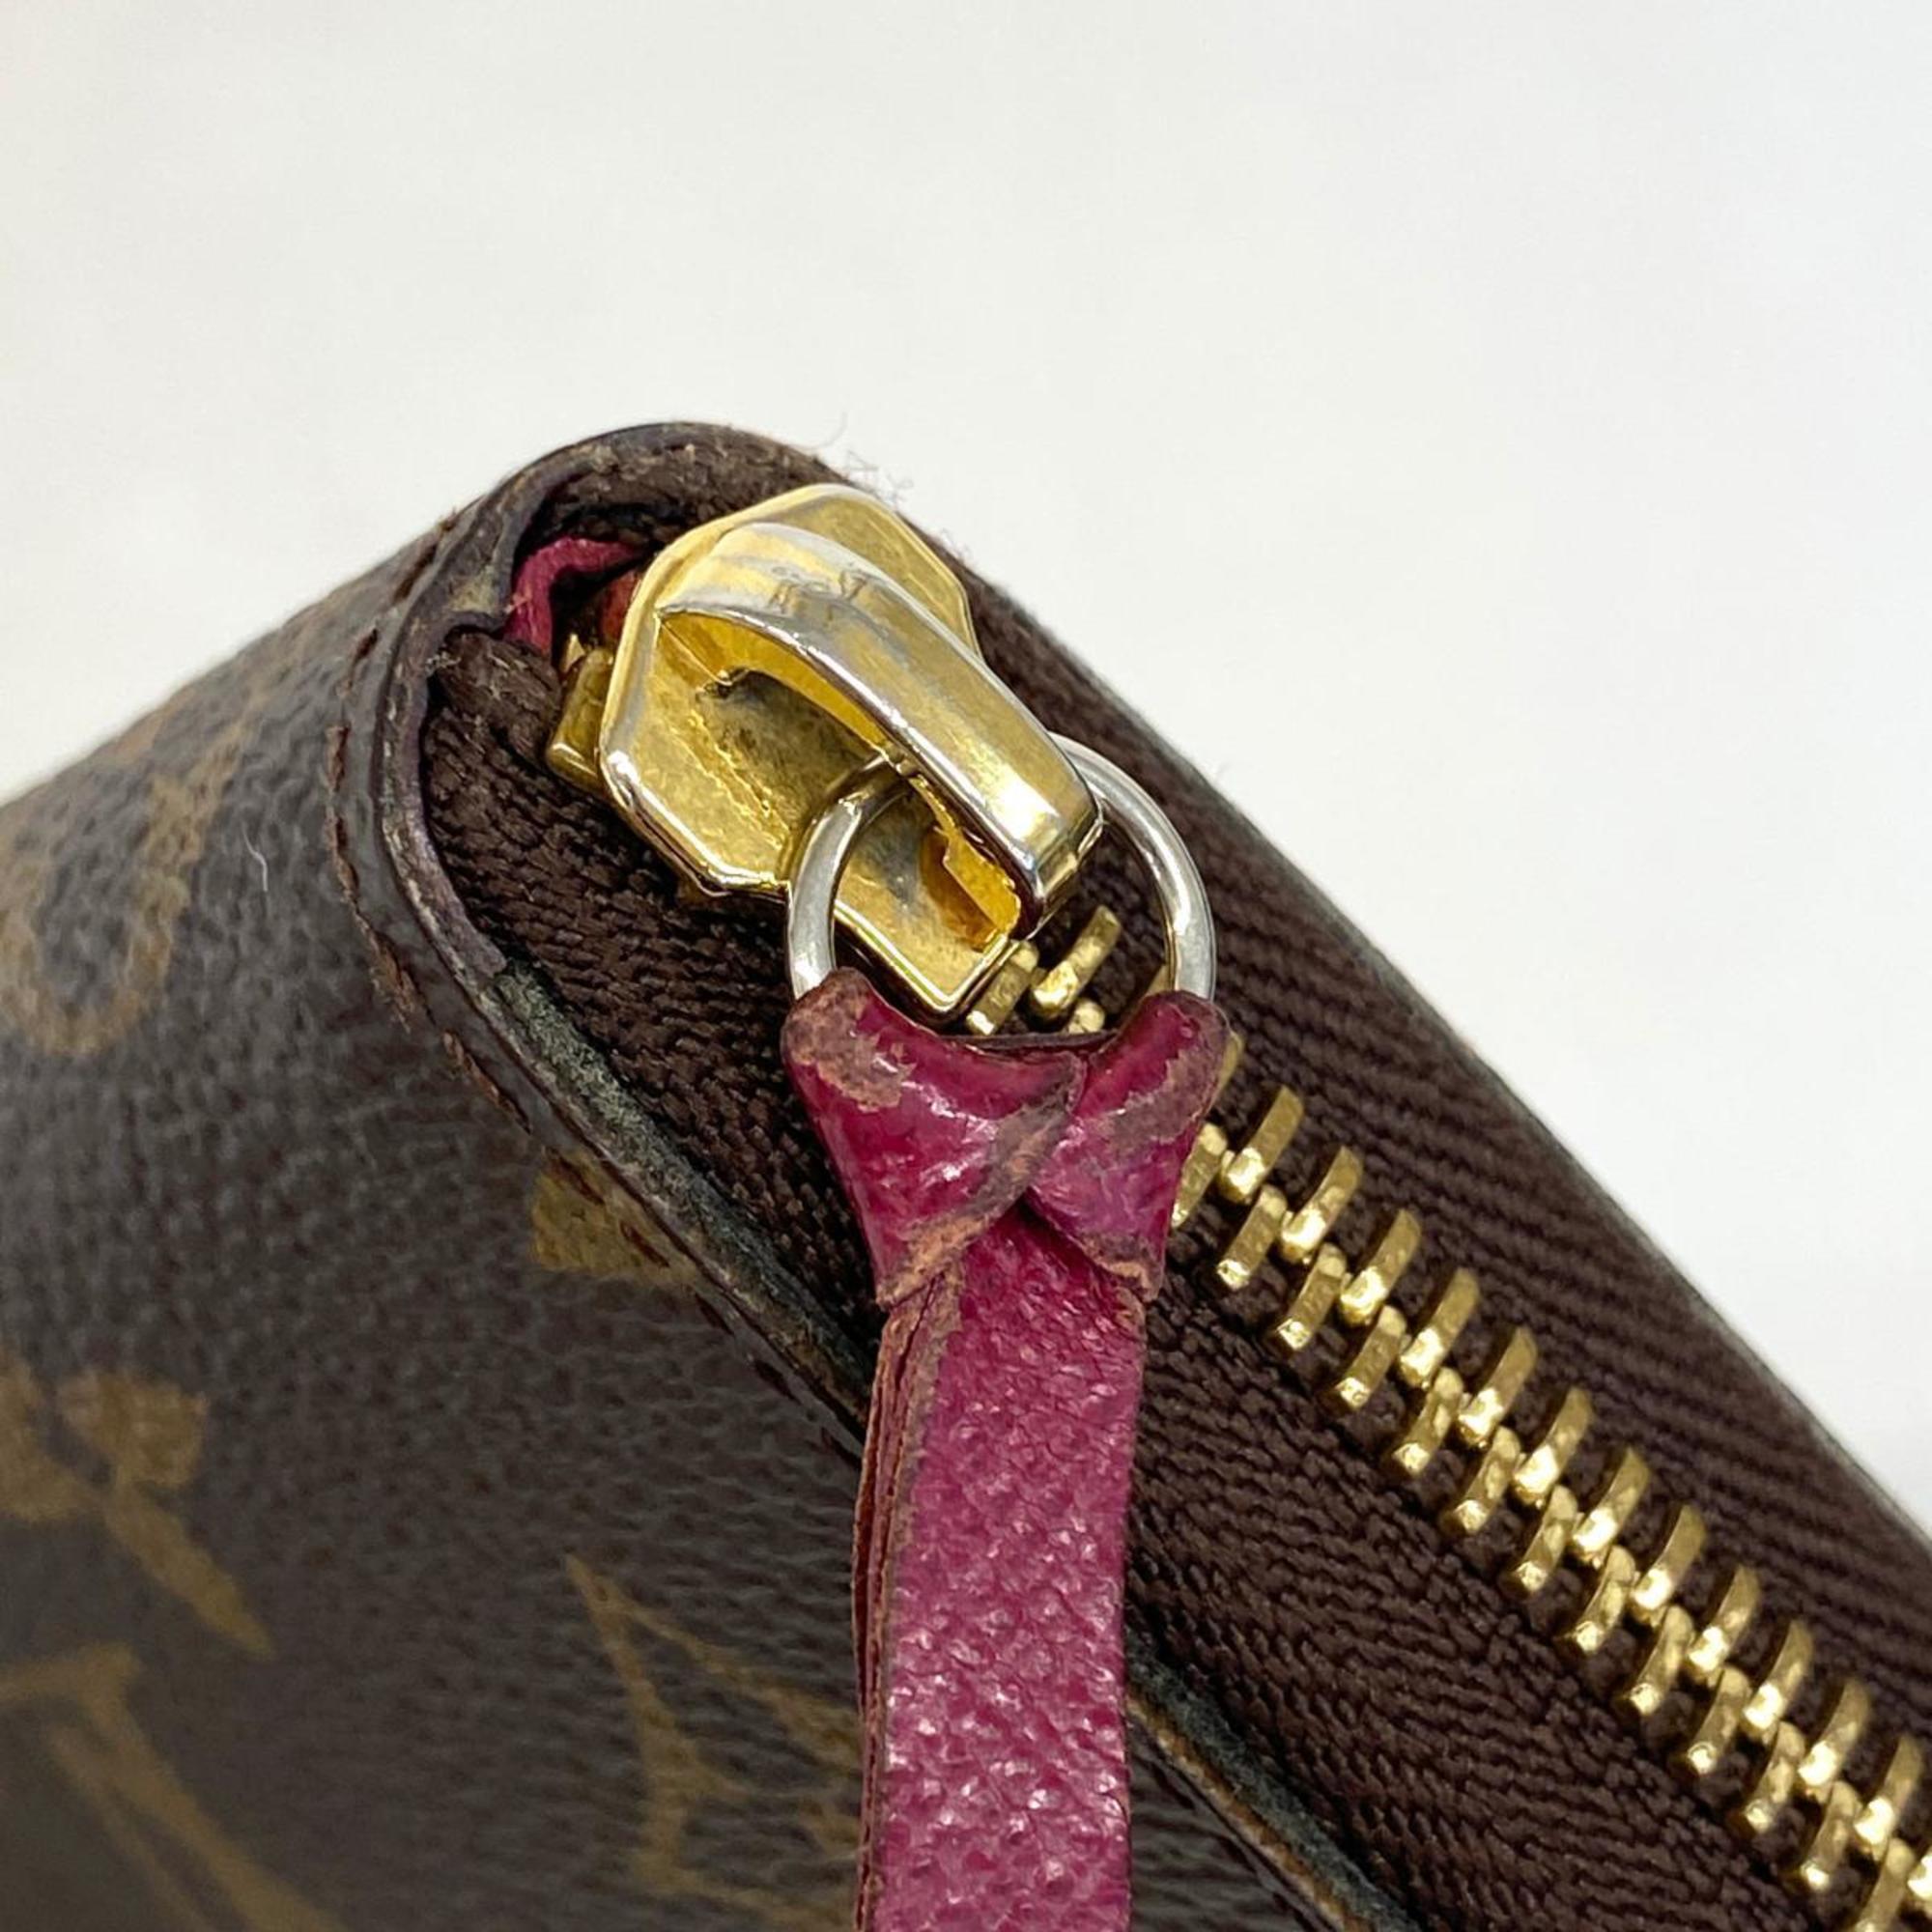 Louis Vuitton Long Wallet Monogram Portefeuille Clemence M60742 Brown Ladies